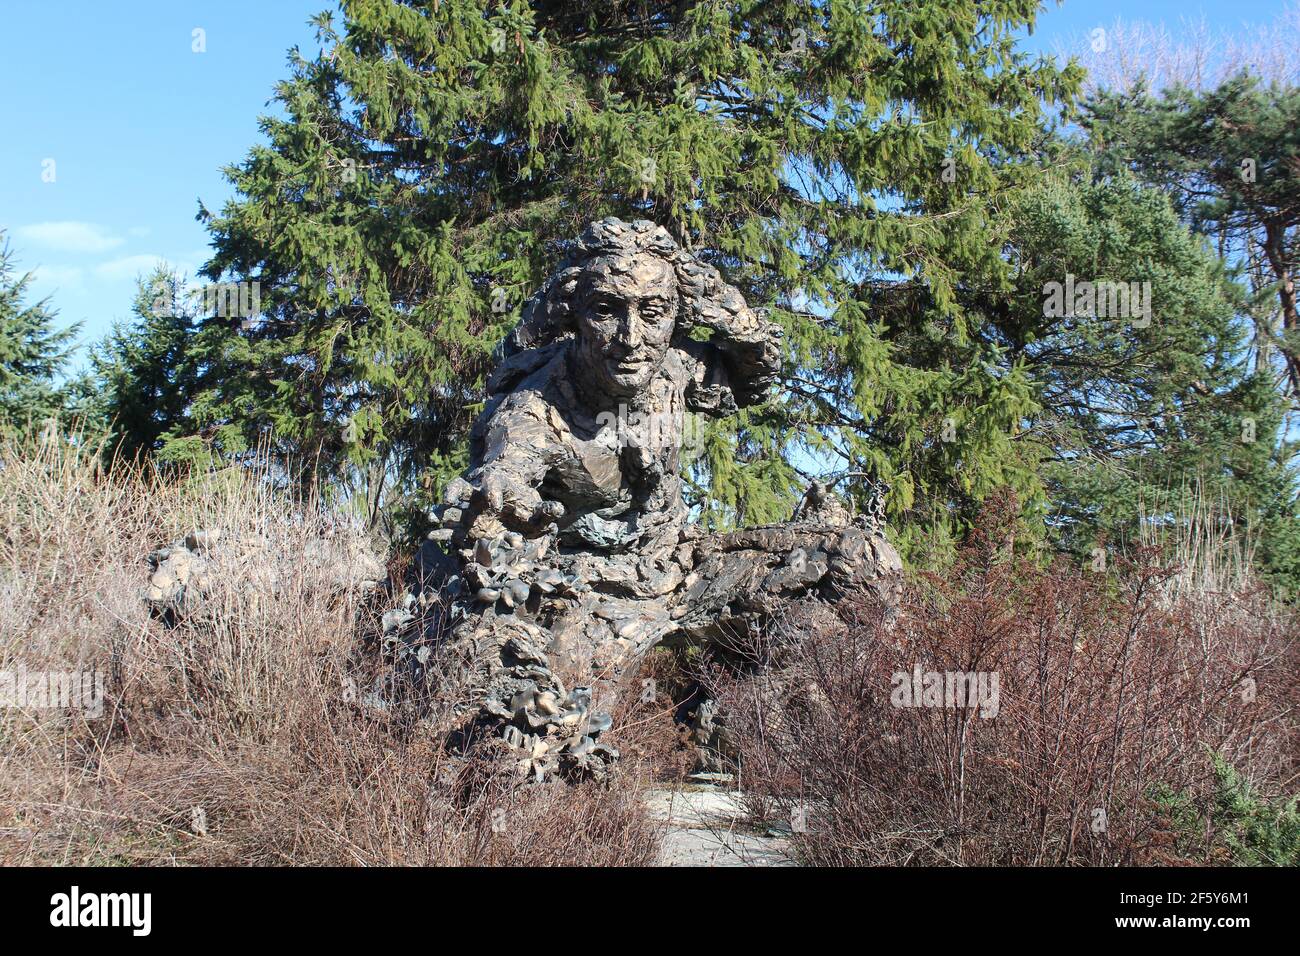 Carl Linnaeus statue at the Chicago Botanic Garden in Glencoe, Illinois Stock Photo